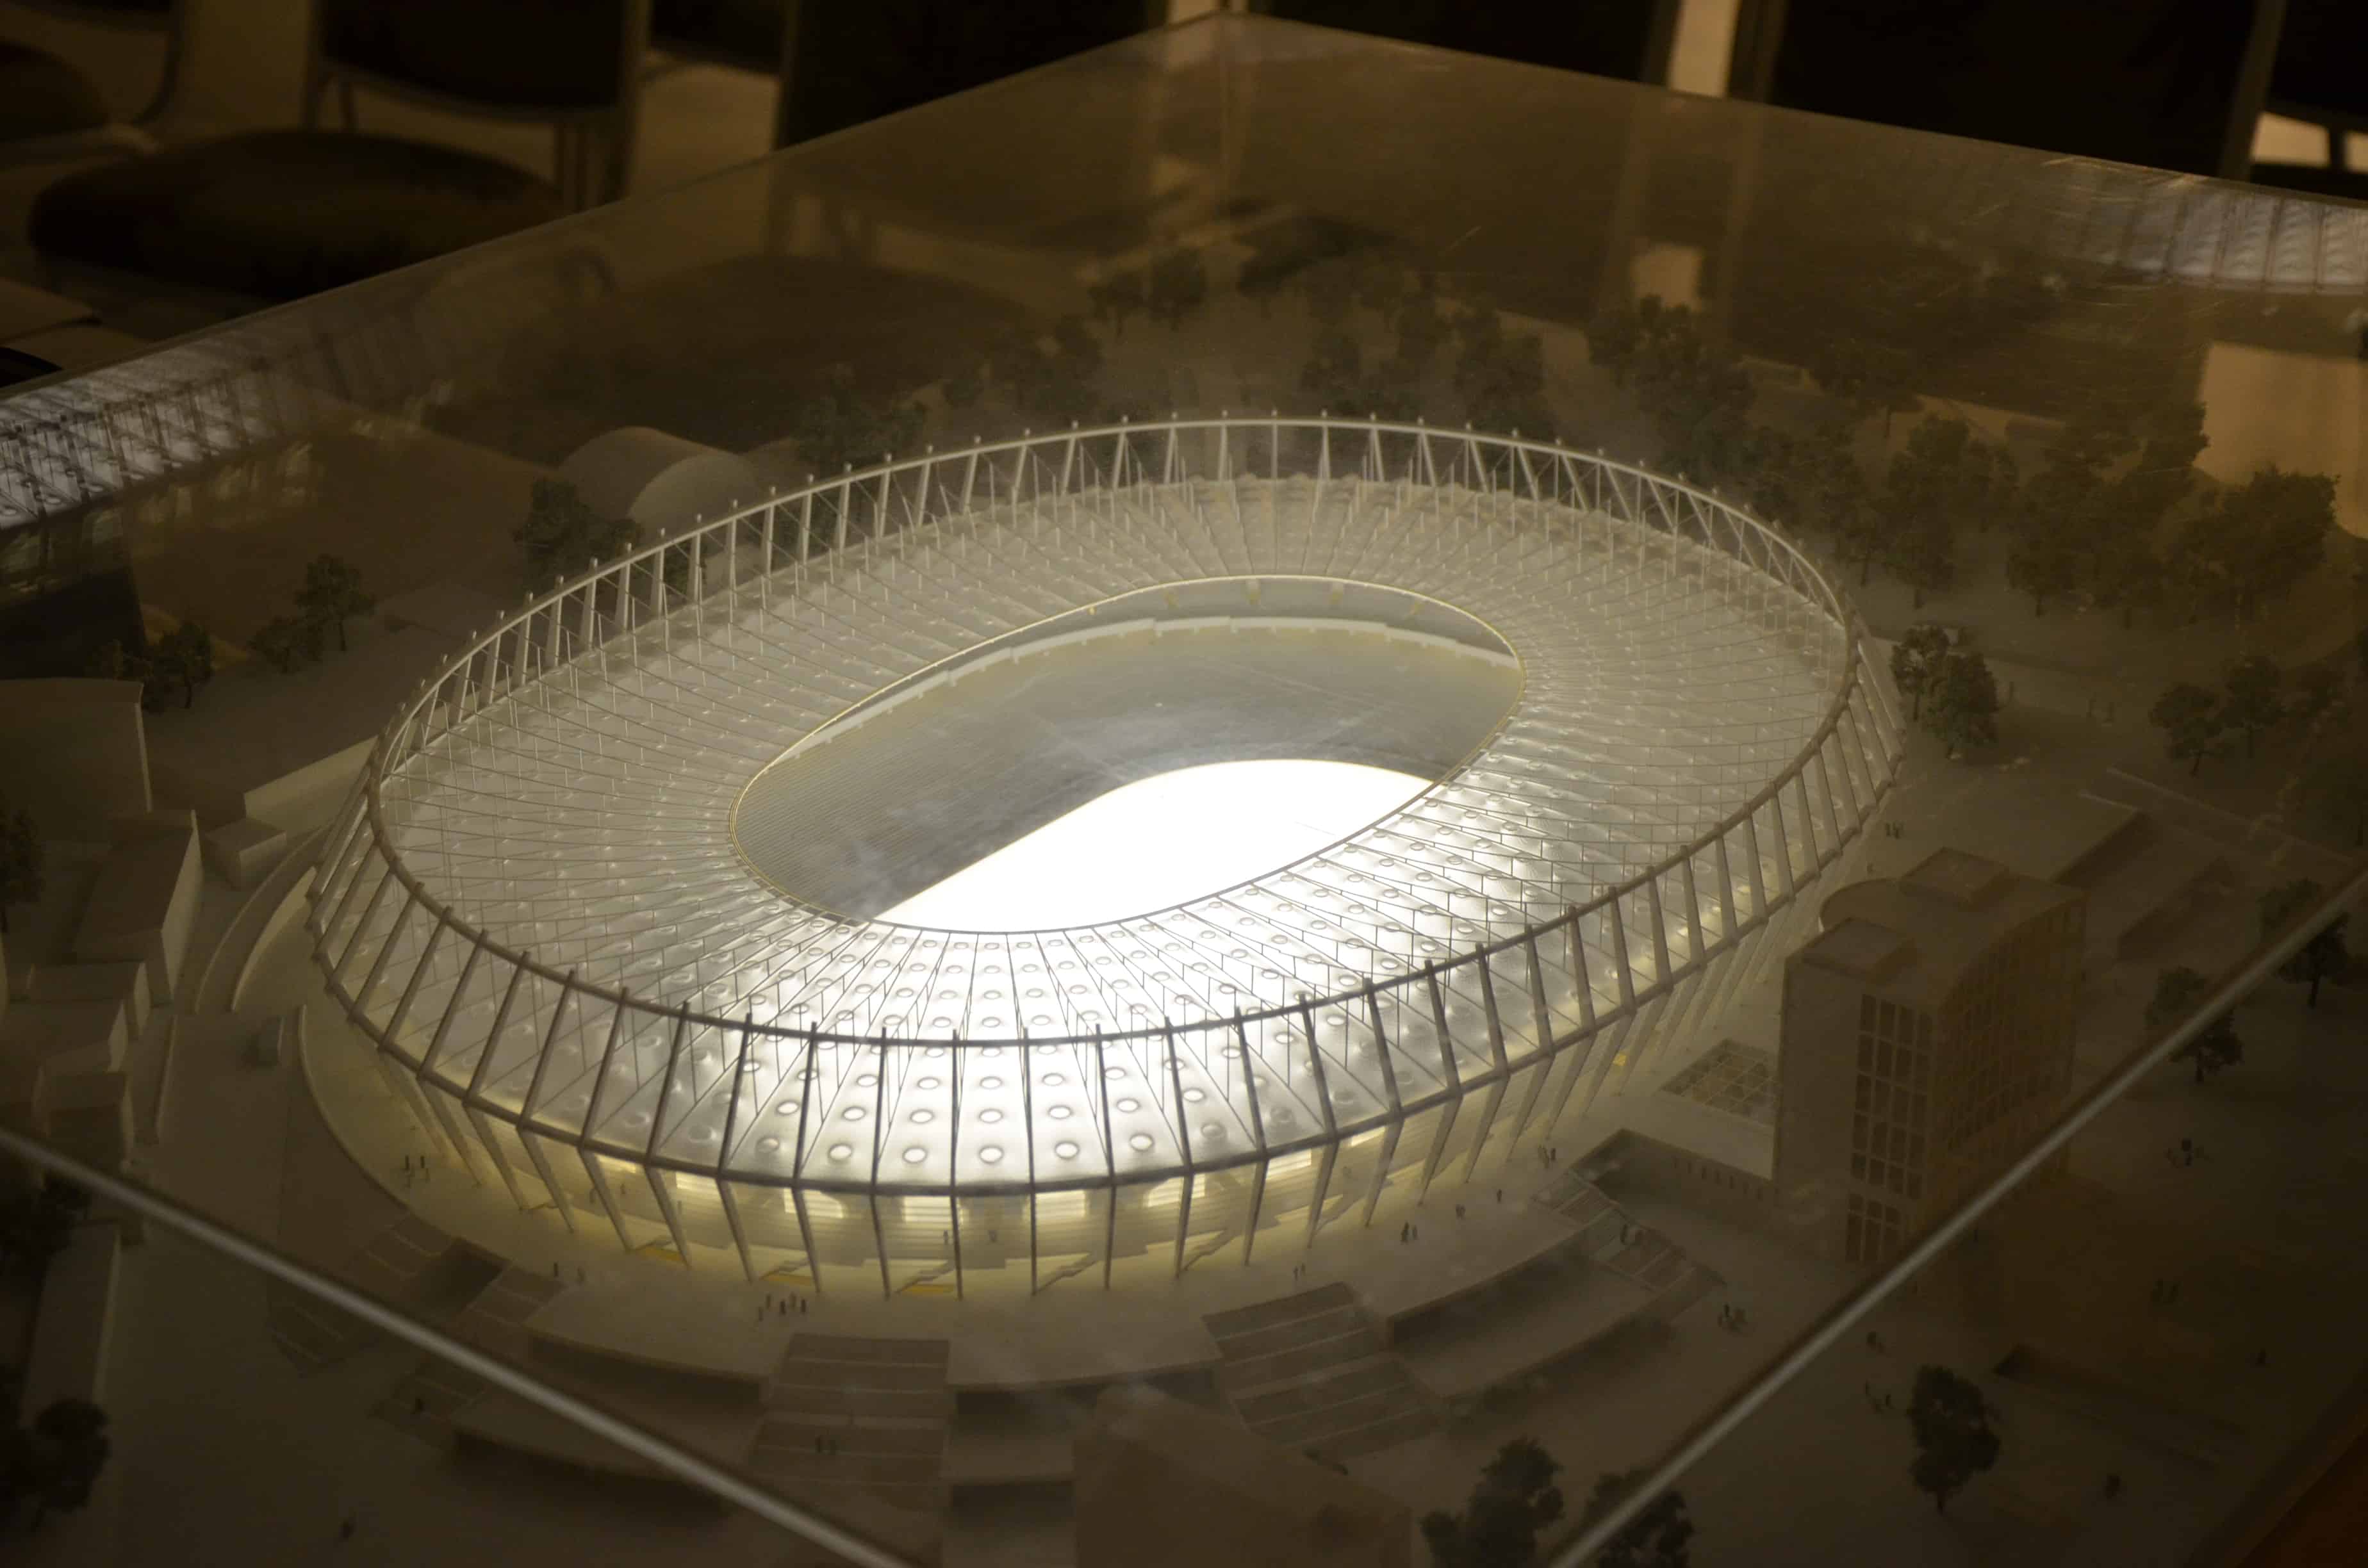 Stadium model in the gallery at Olimpiyskiy National Sports Complex in Kyiv, Ukraine